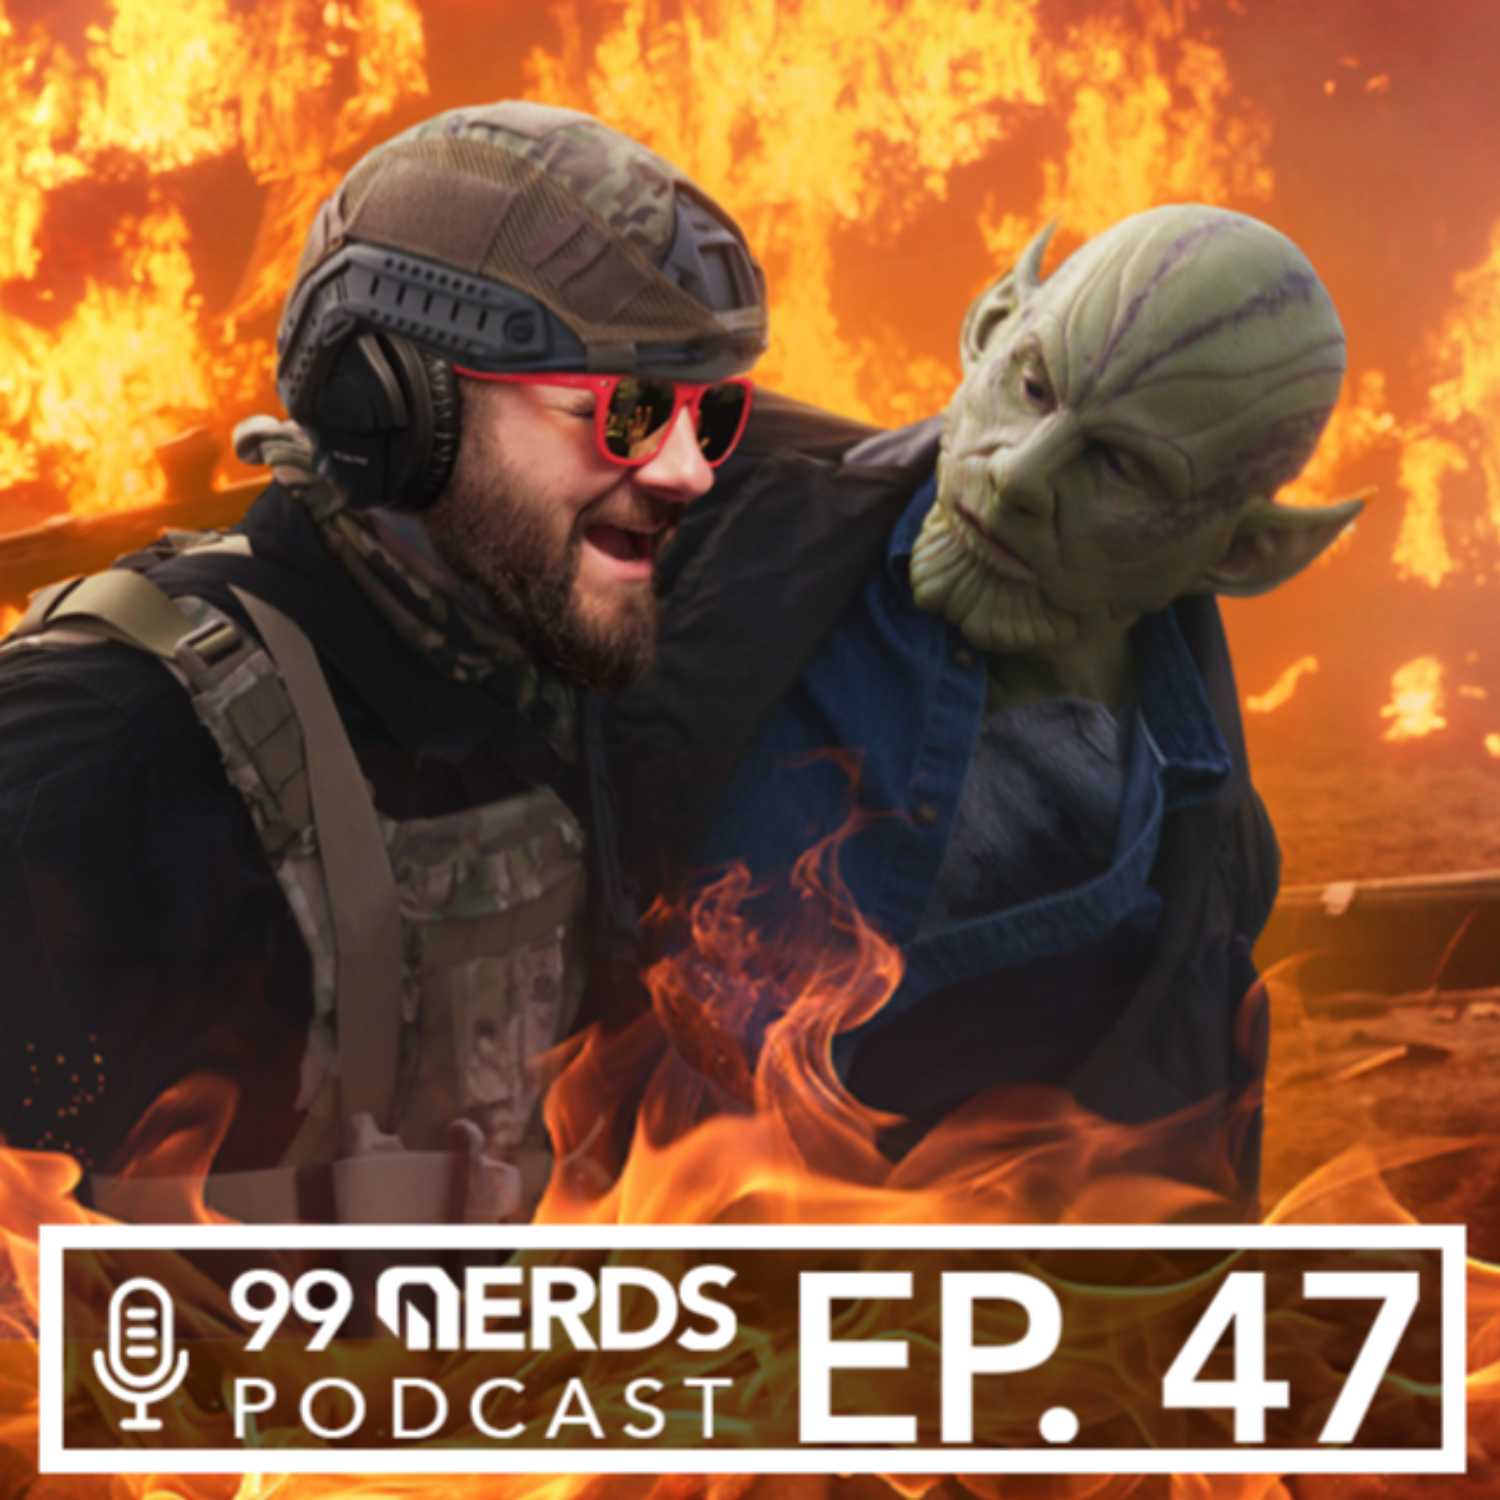 99 Nerds Episode 47: Secret Invasion Review